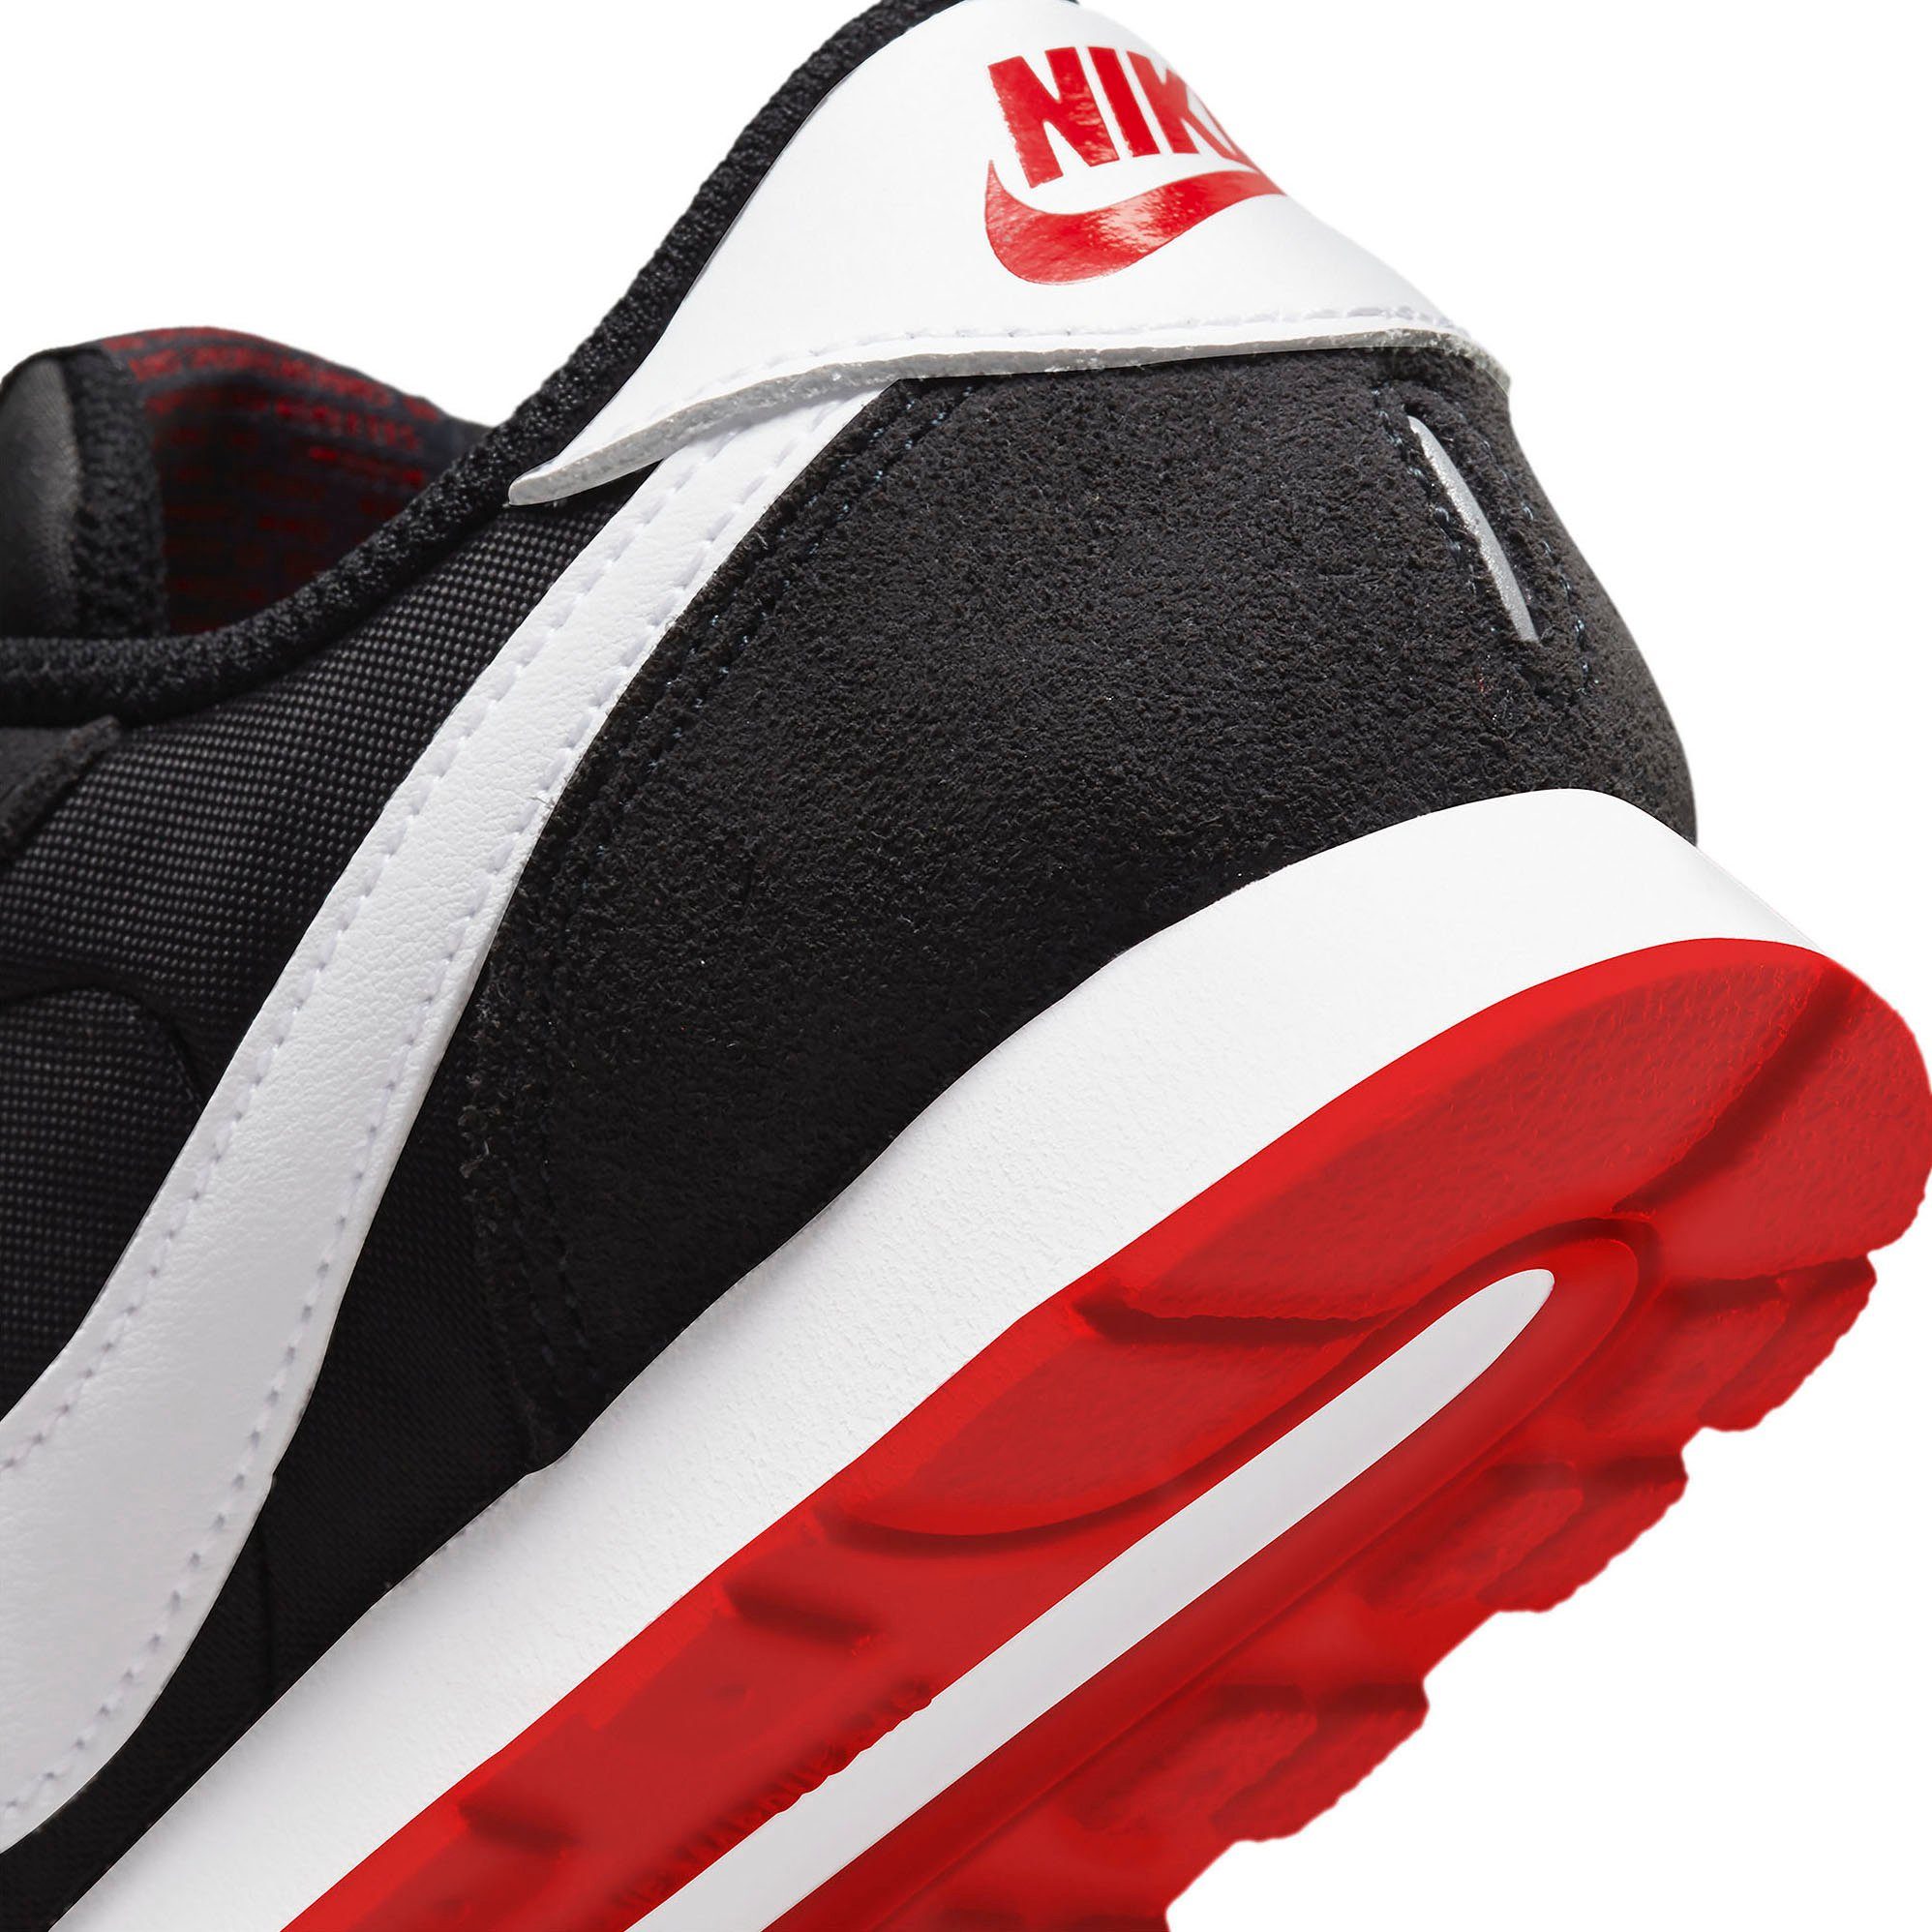 Nike Sportswear MD VALIANT schwarz-weiß Sneaker (PS) Klettverschluss mit